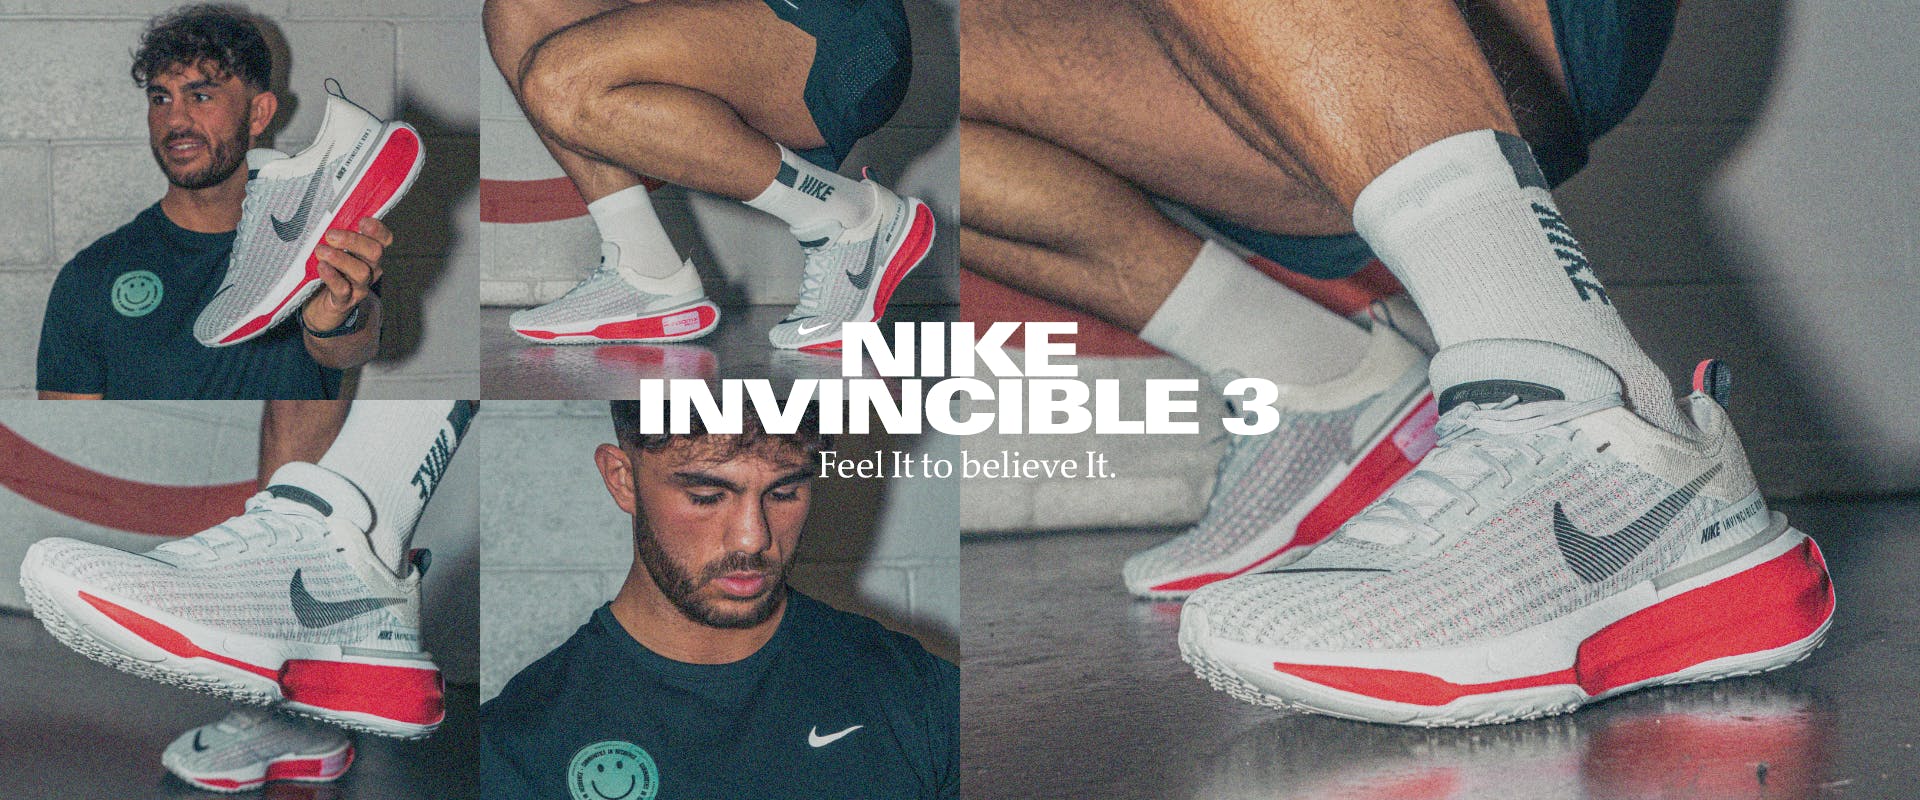 Nike Invincble 3